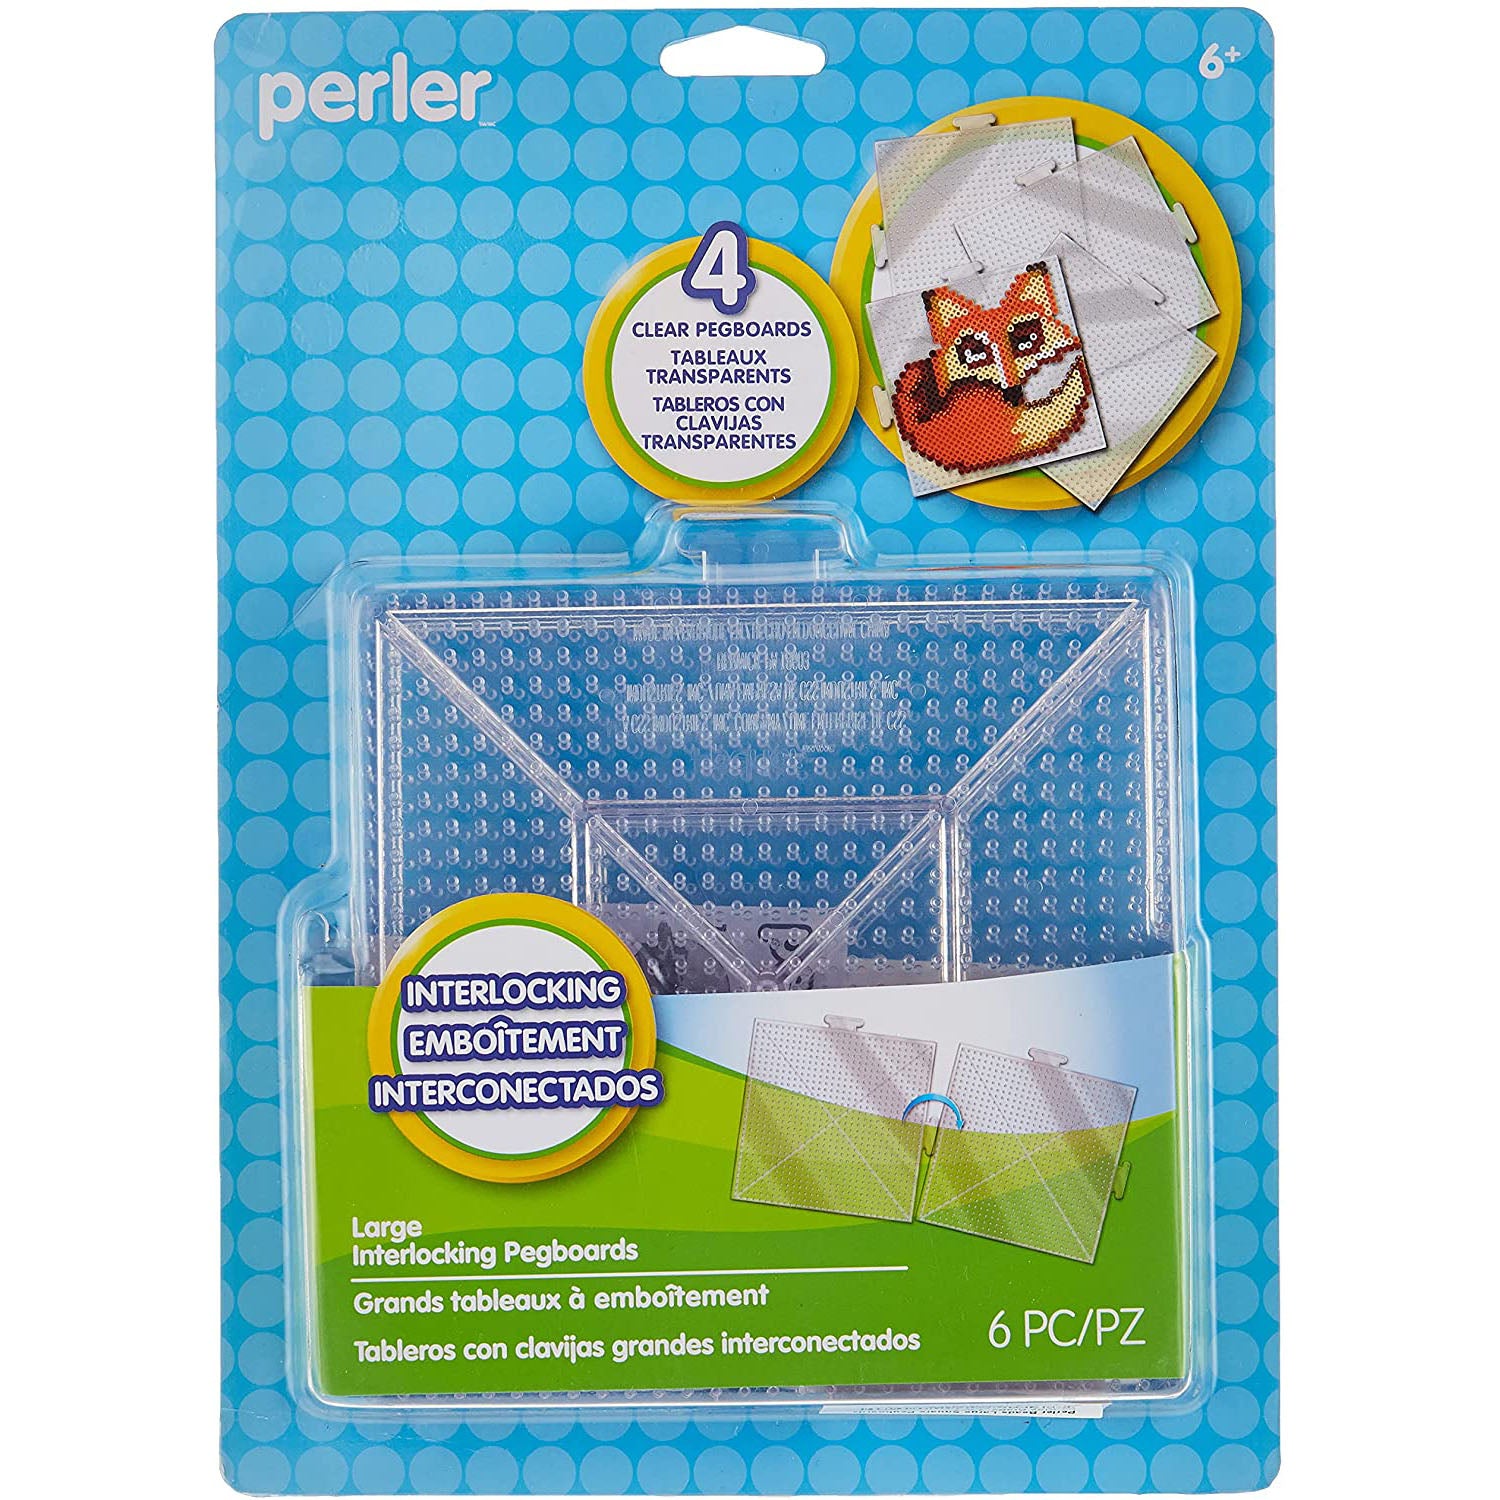 Perler Standard 4 Pack Pegboards